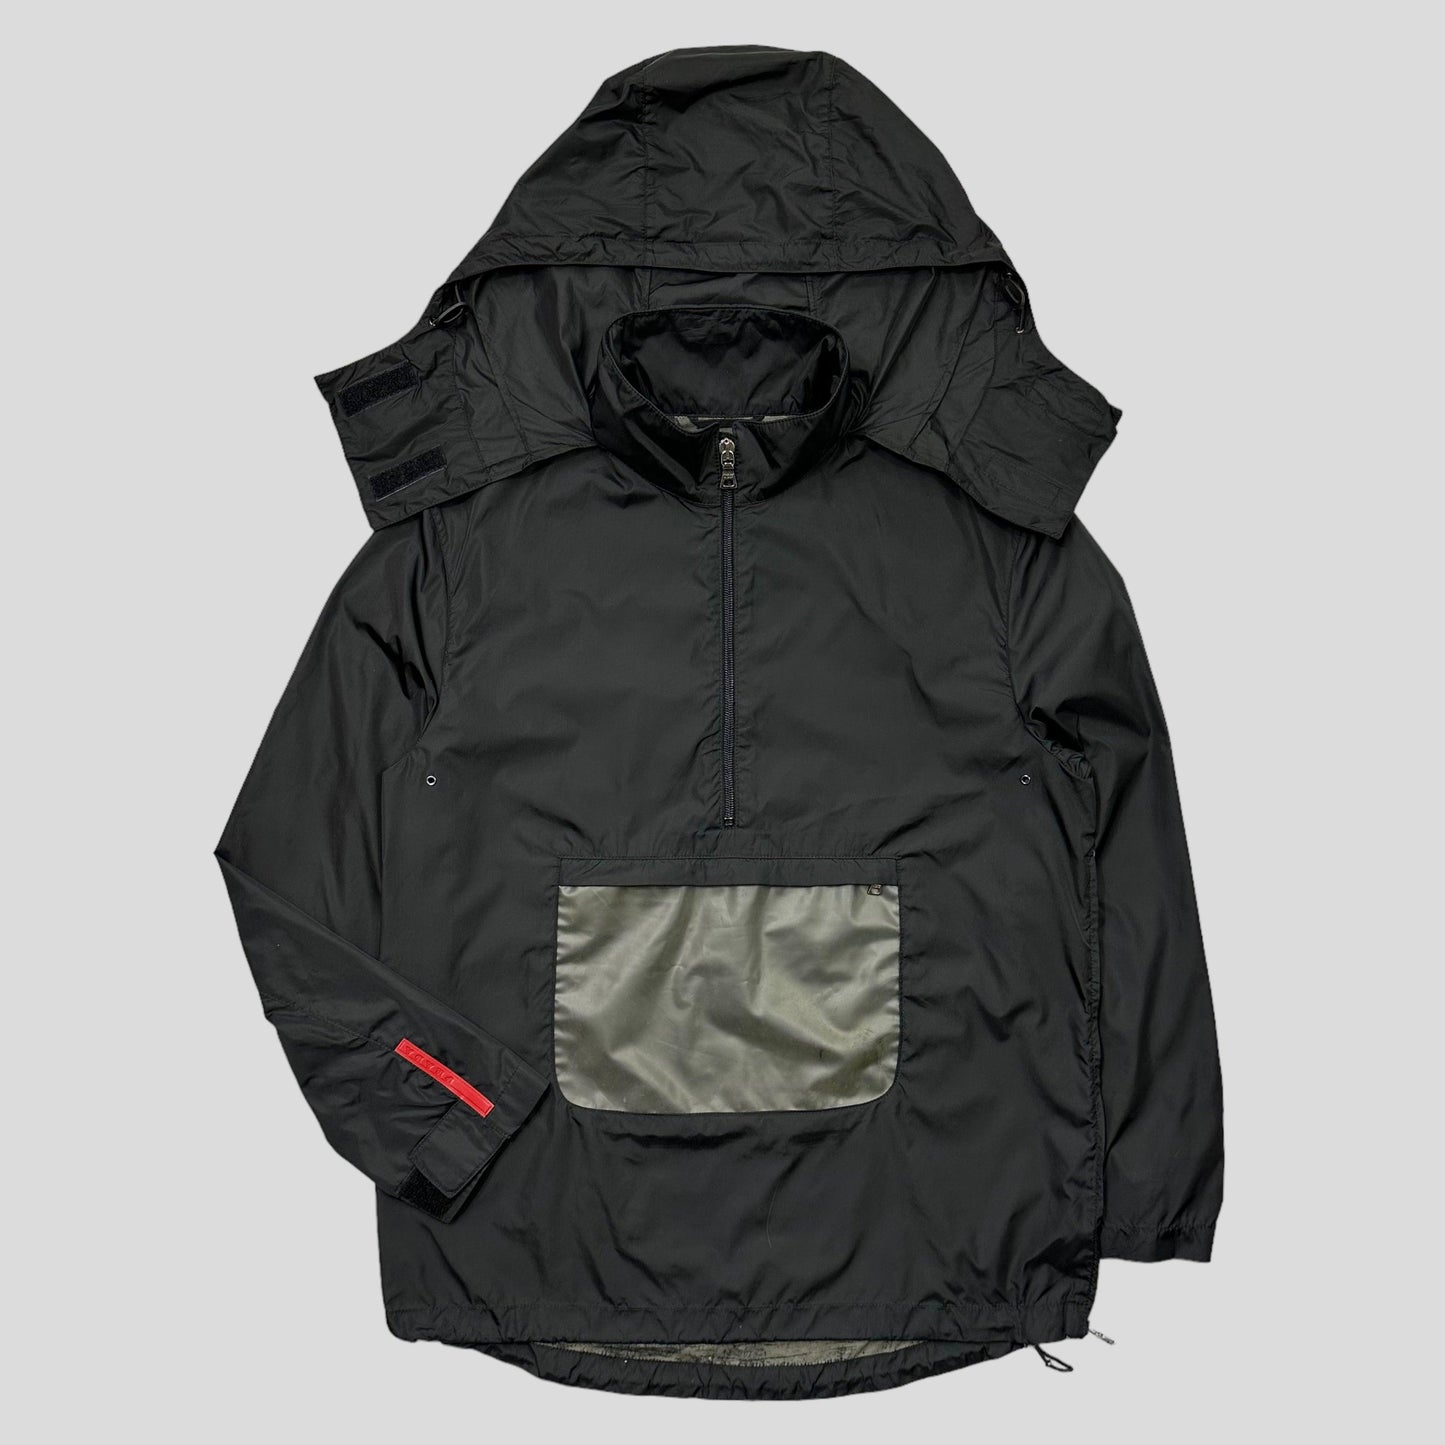 Prada Sport SS99 Latex Pocket Nylon Pullover Jacket - IT40 - Known Source